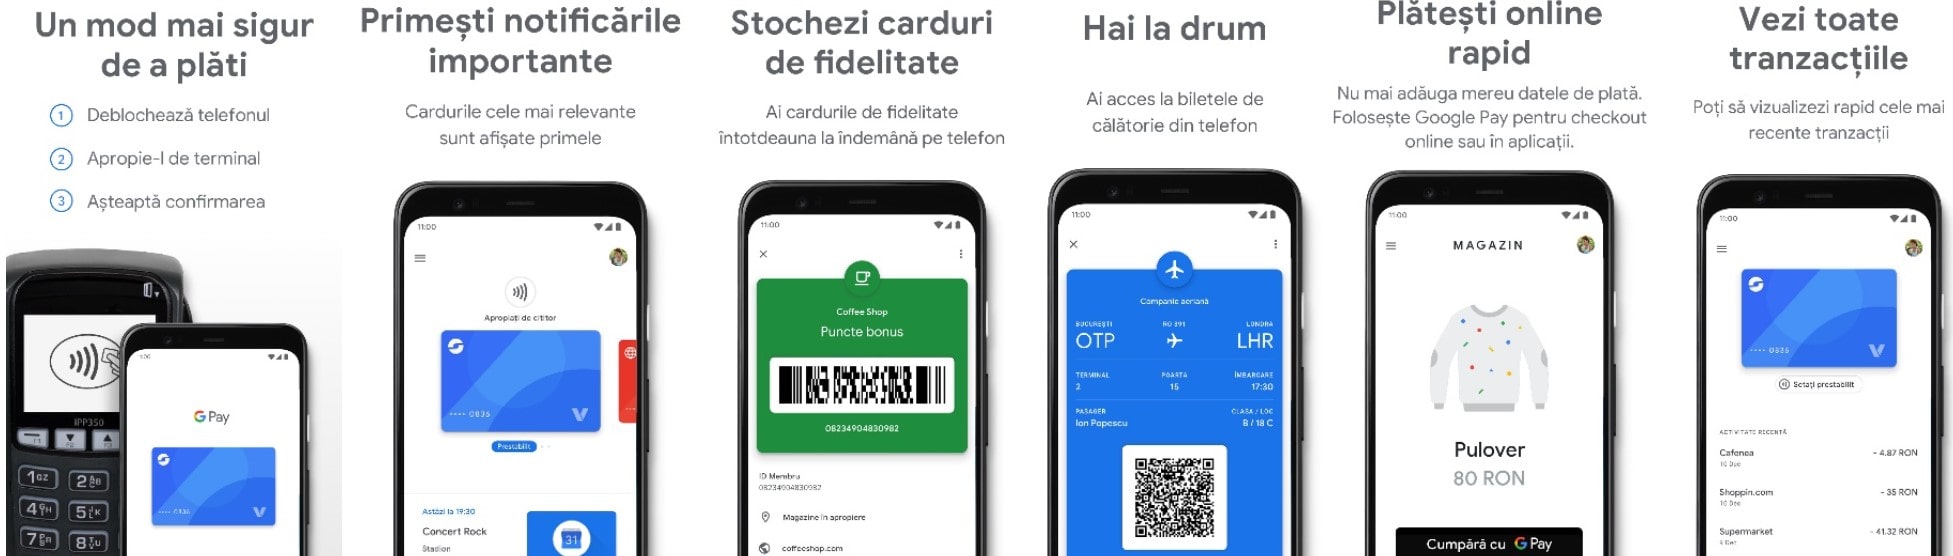 Google Pay lansare in Romania